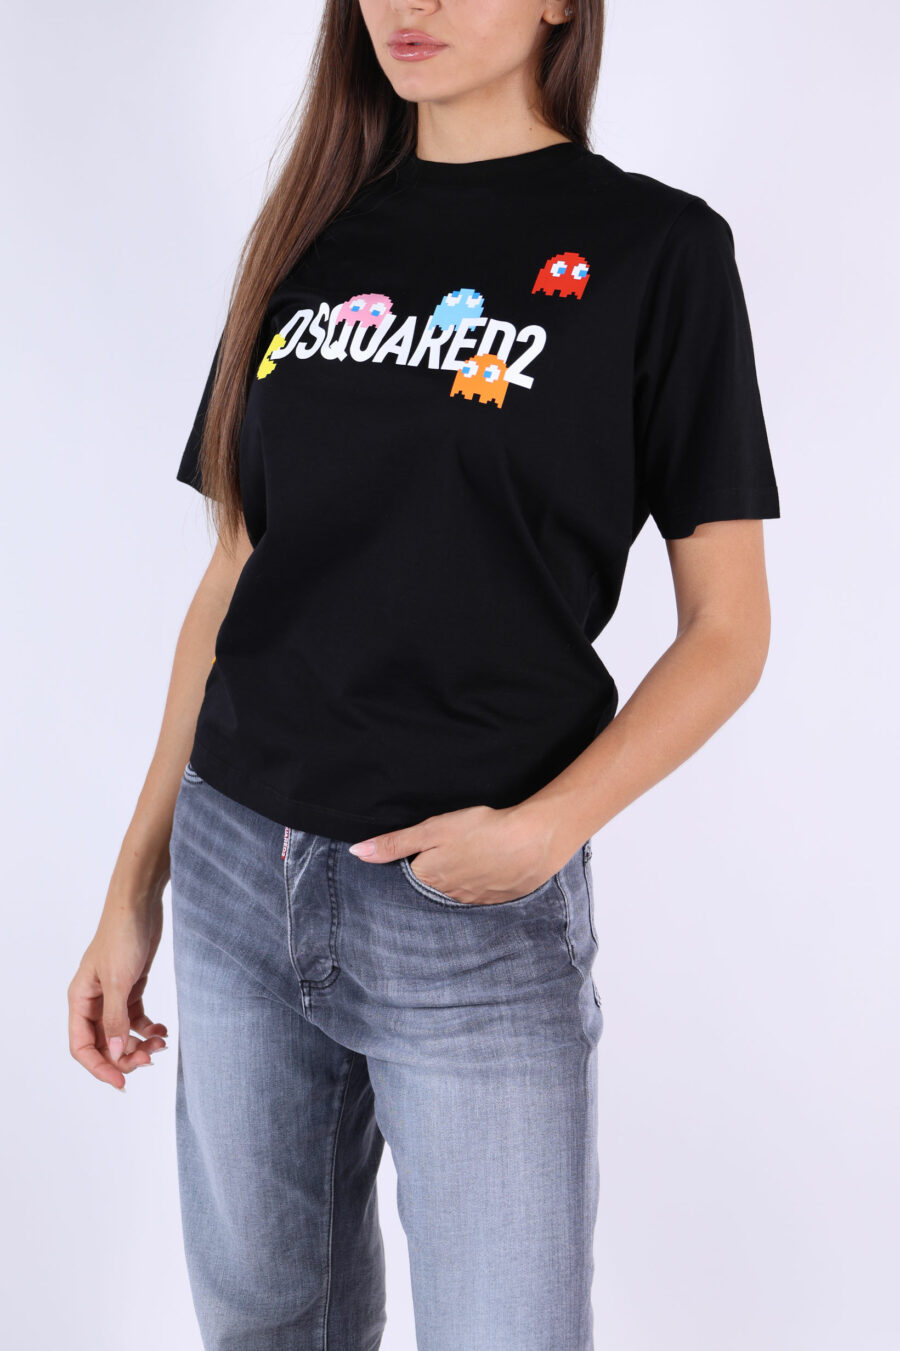 Black T-shirt with "Pac-man" logo - 361223054662201962